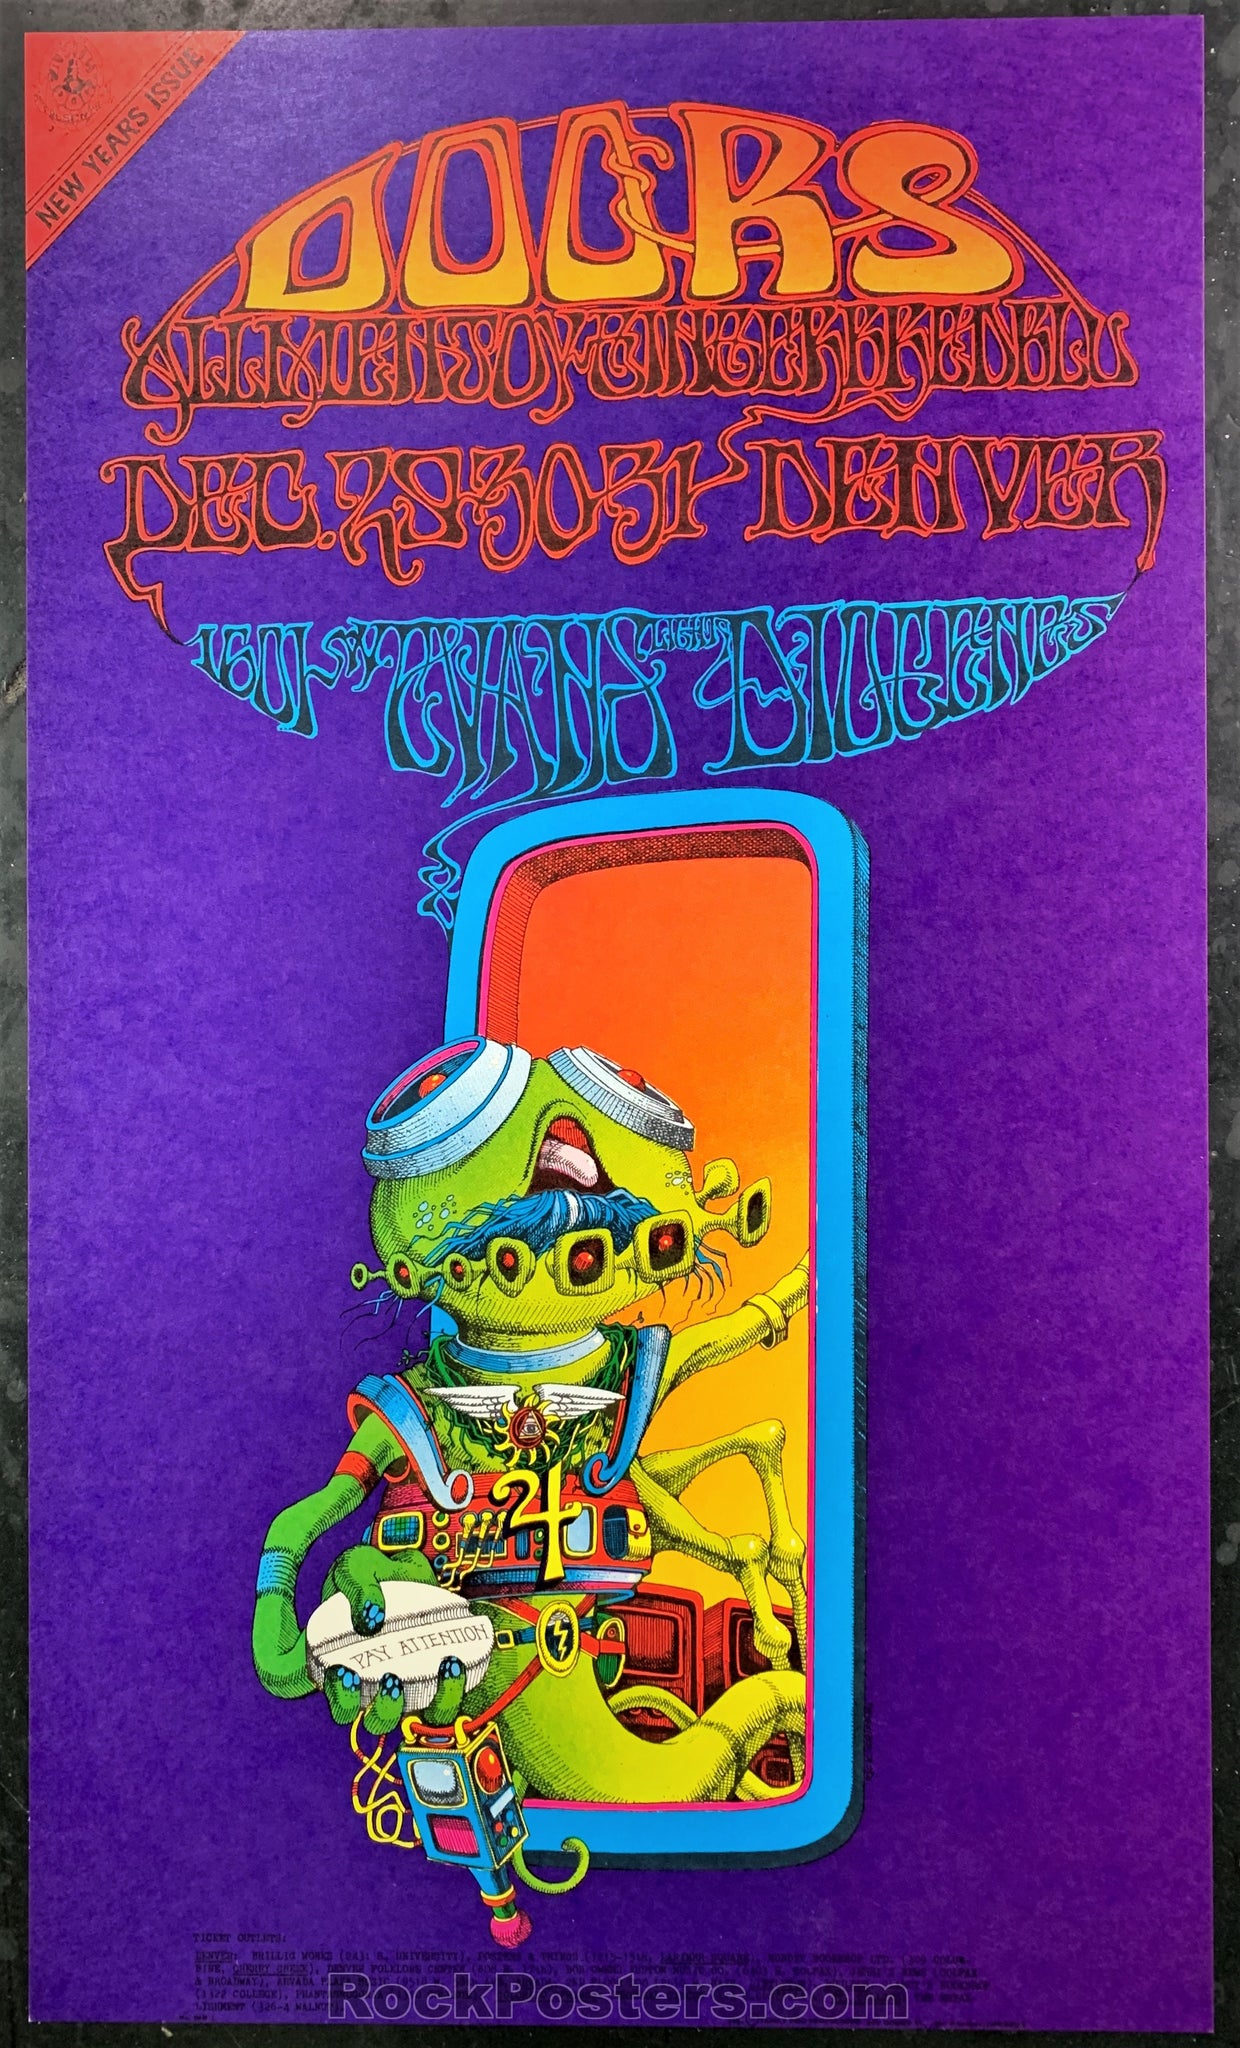 AUCTION - FDD-18 - The Doors Rick Griffin - 1967 Poster - Family Dog Denver - Near Mint